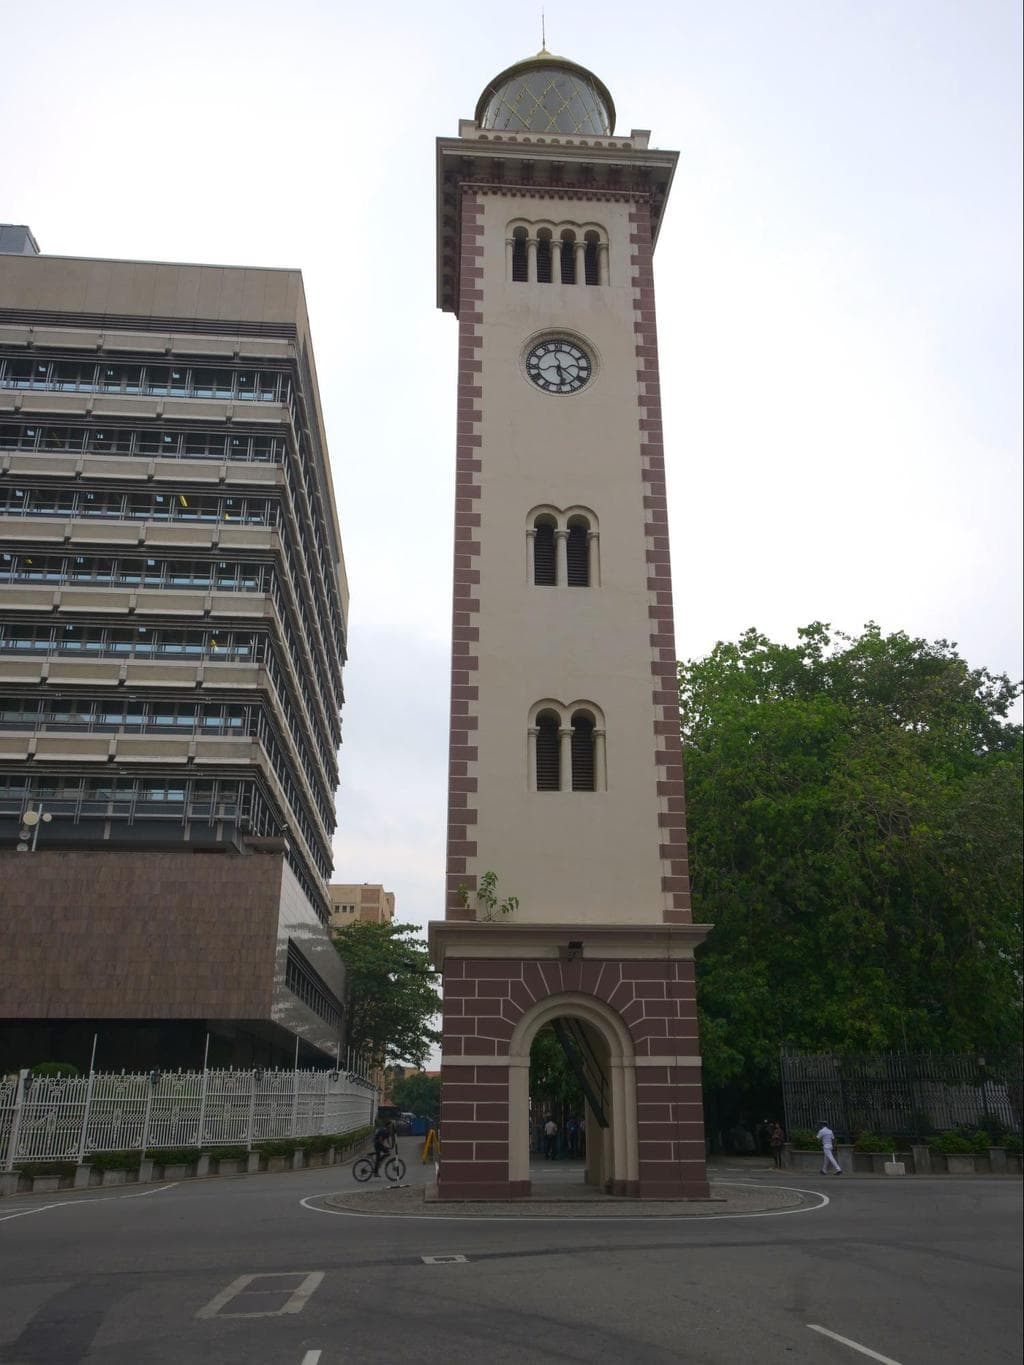 Lighthouse Clock Tower